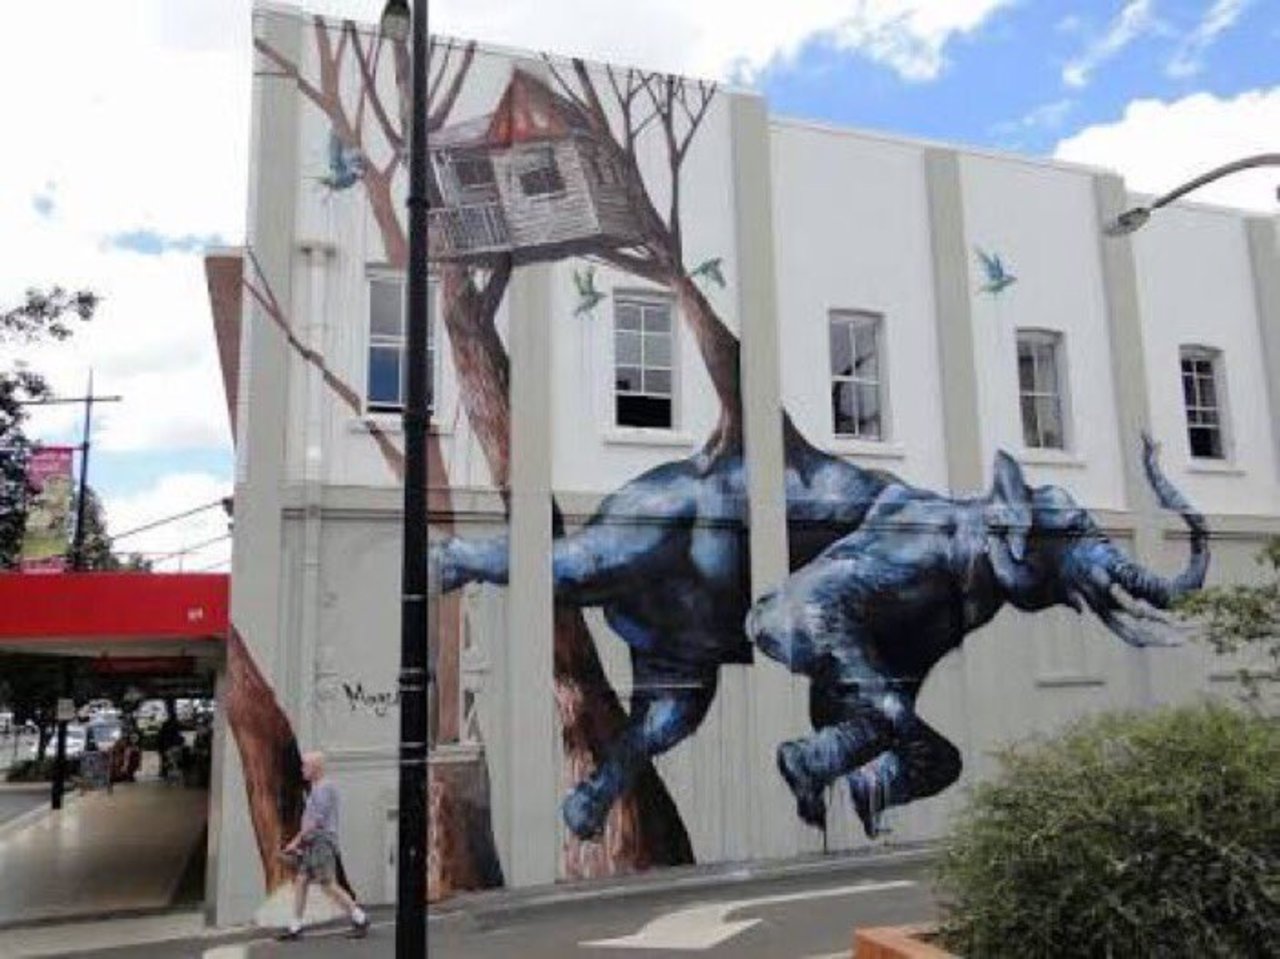 #Mural by Fintan Magee #Toowoomba #Australia #Streetart #urbanart #graffiti #art https://t.co/9vCsbfXmHc